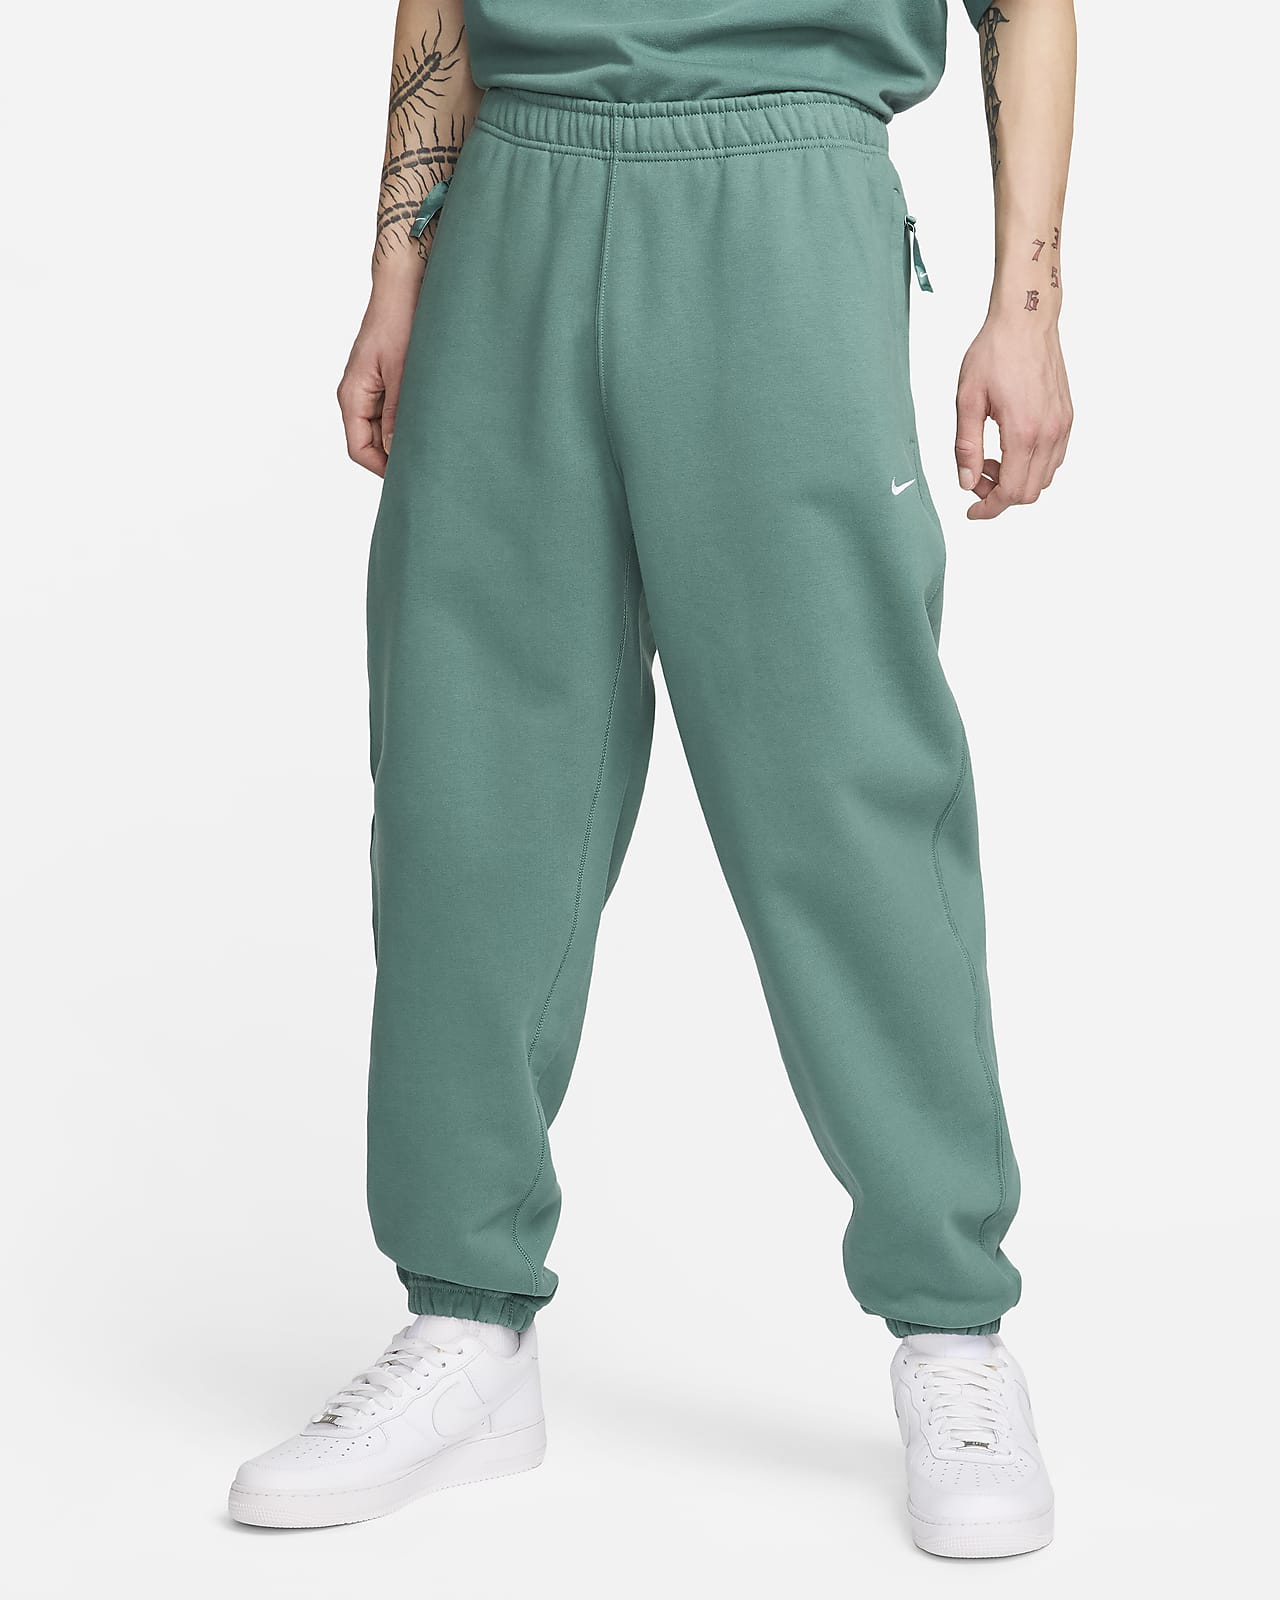 Nike Solo Swoosh Pantalons de teixit Fleece - Home